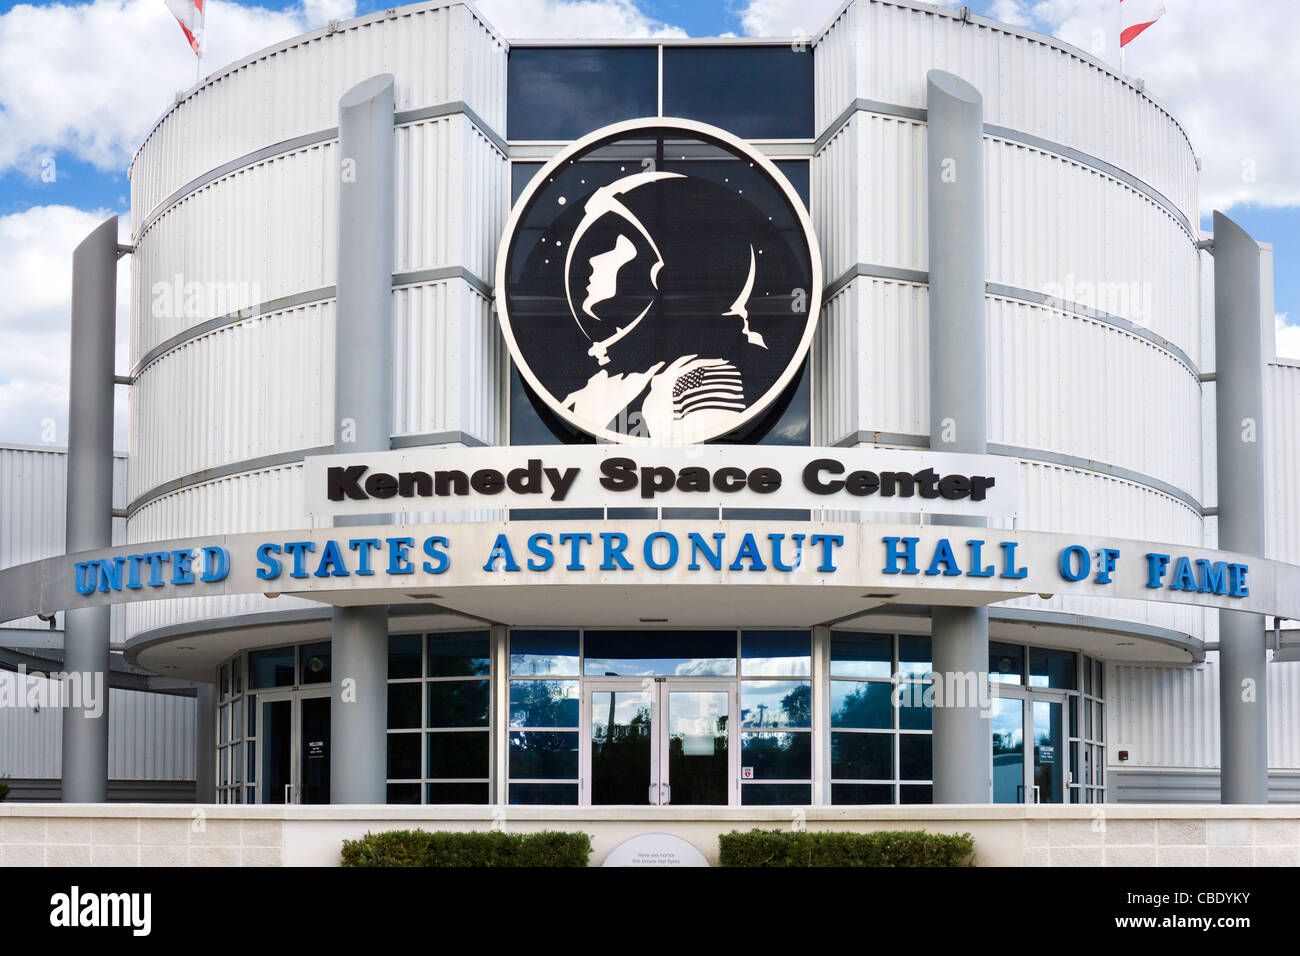 Centro Espacial Kennedy Estados Unidos Astronaut Hall of Fame, Florida, EE.UU. Foto de stock